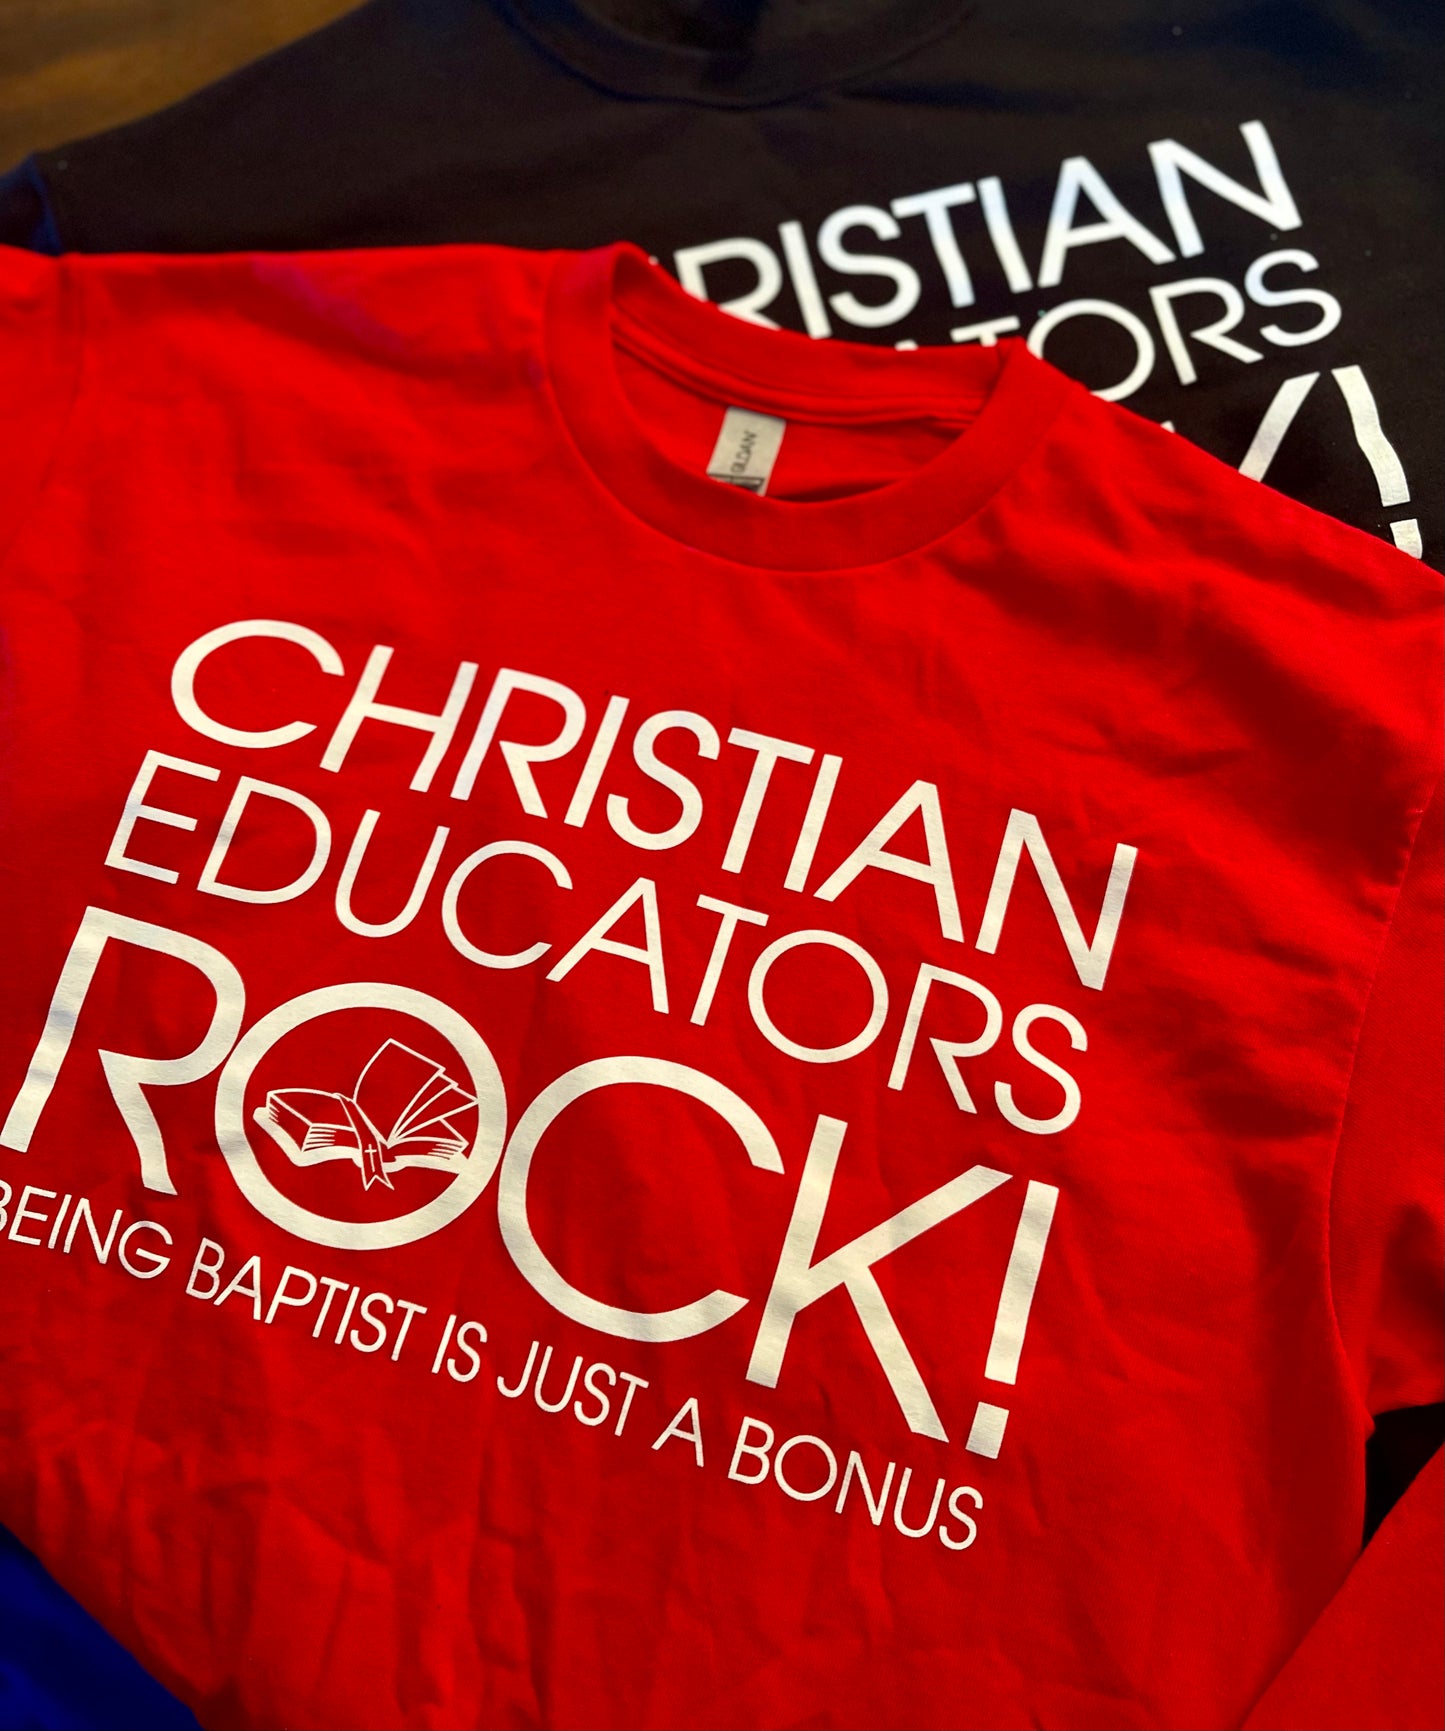 Christian Educators ROCK! Gold Package